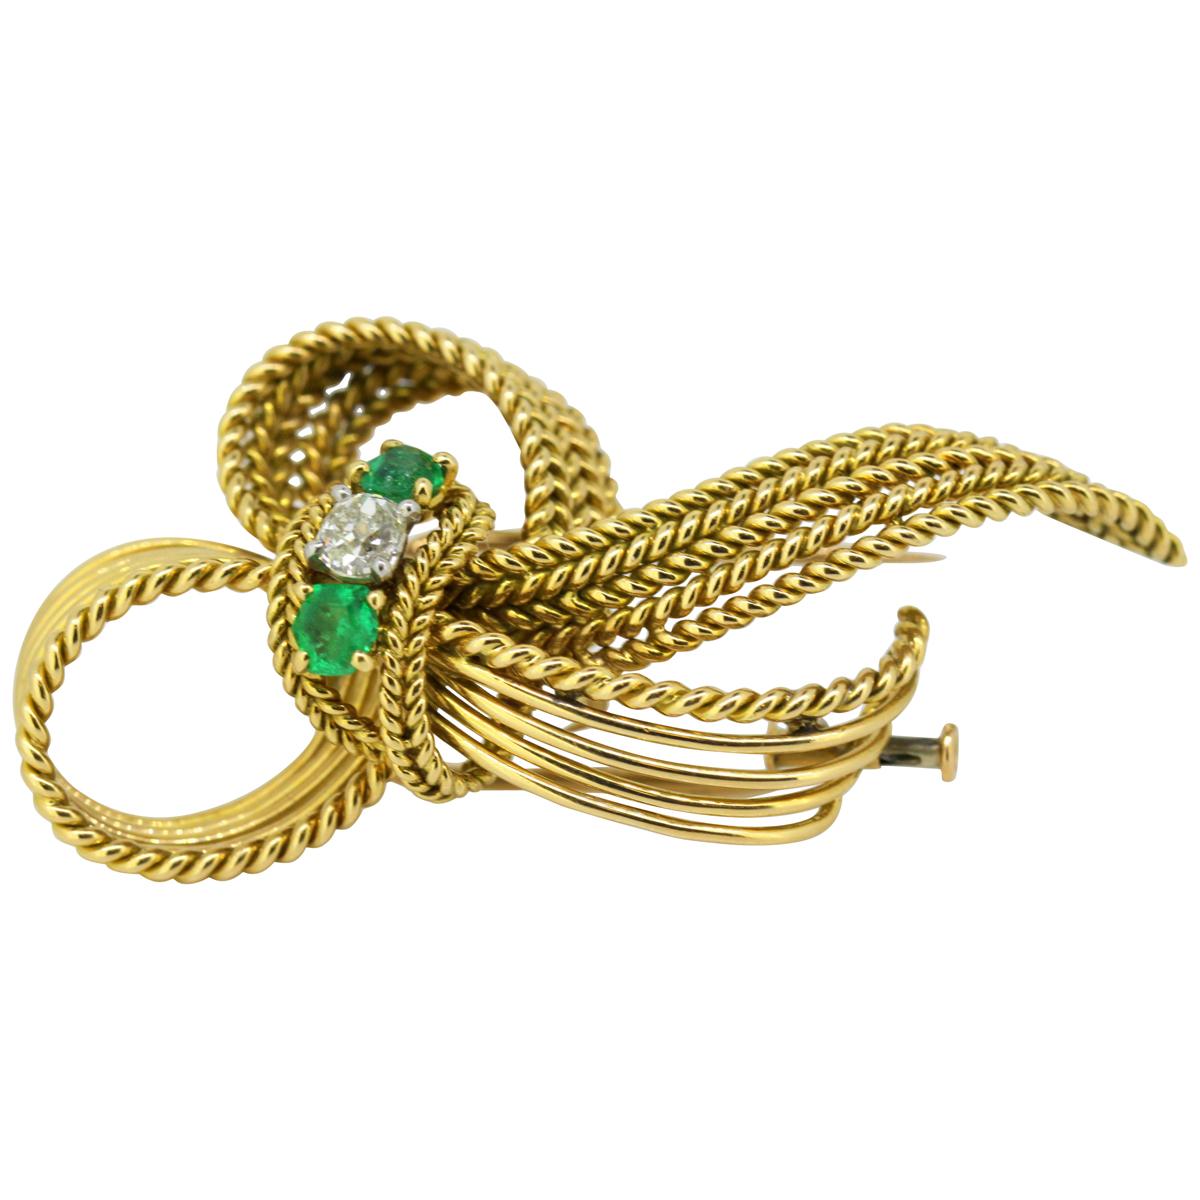 Mellerio dits Meller, Art Deco 18 Karat Gold Brooch with Emeralds and Diamond